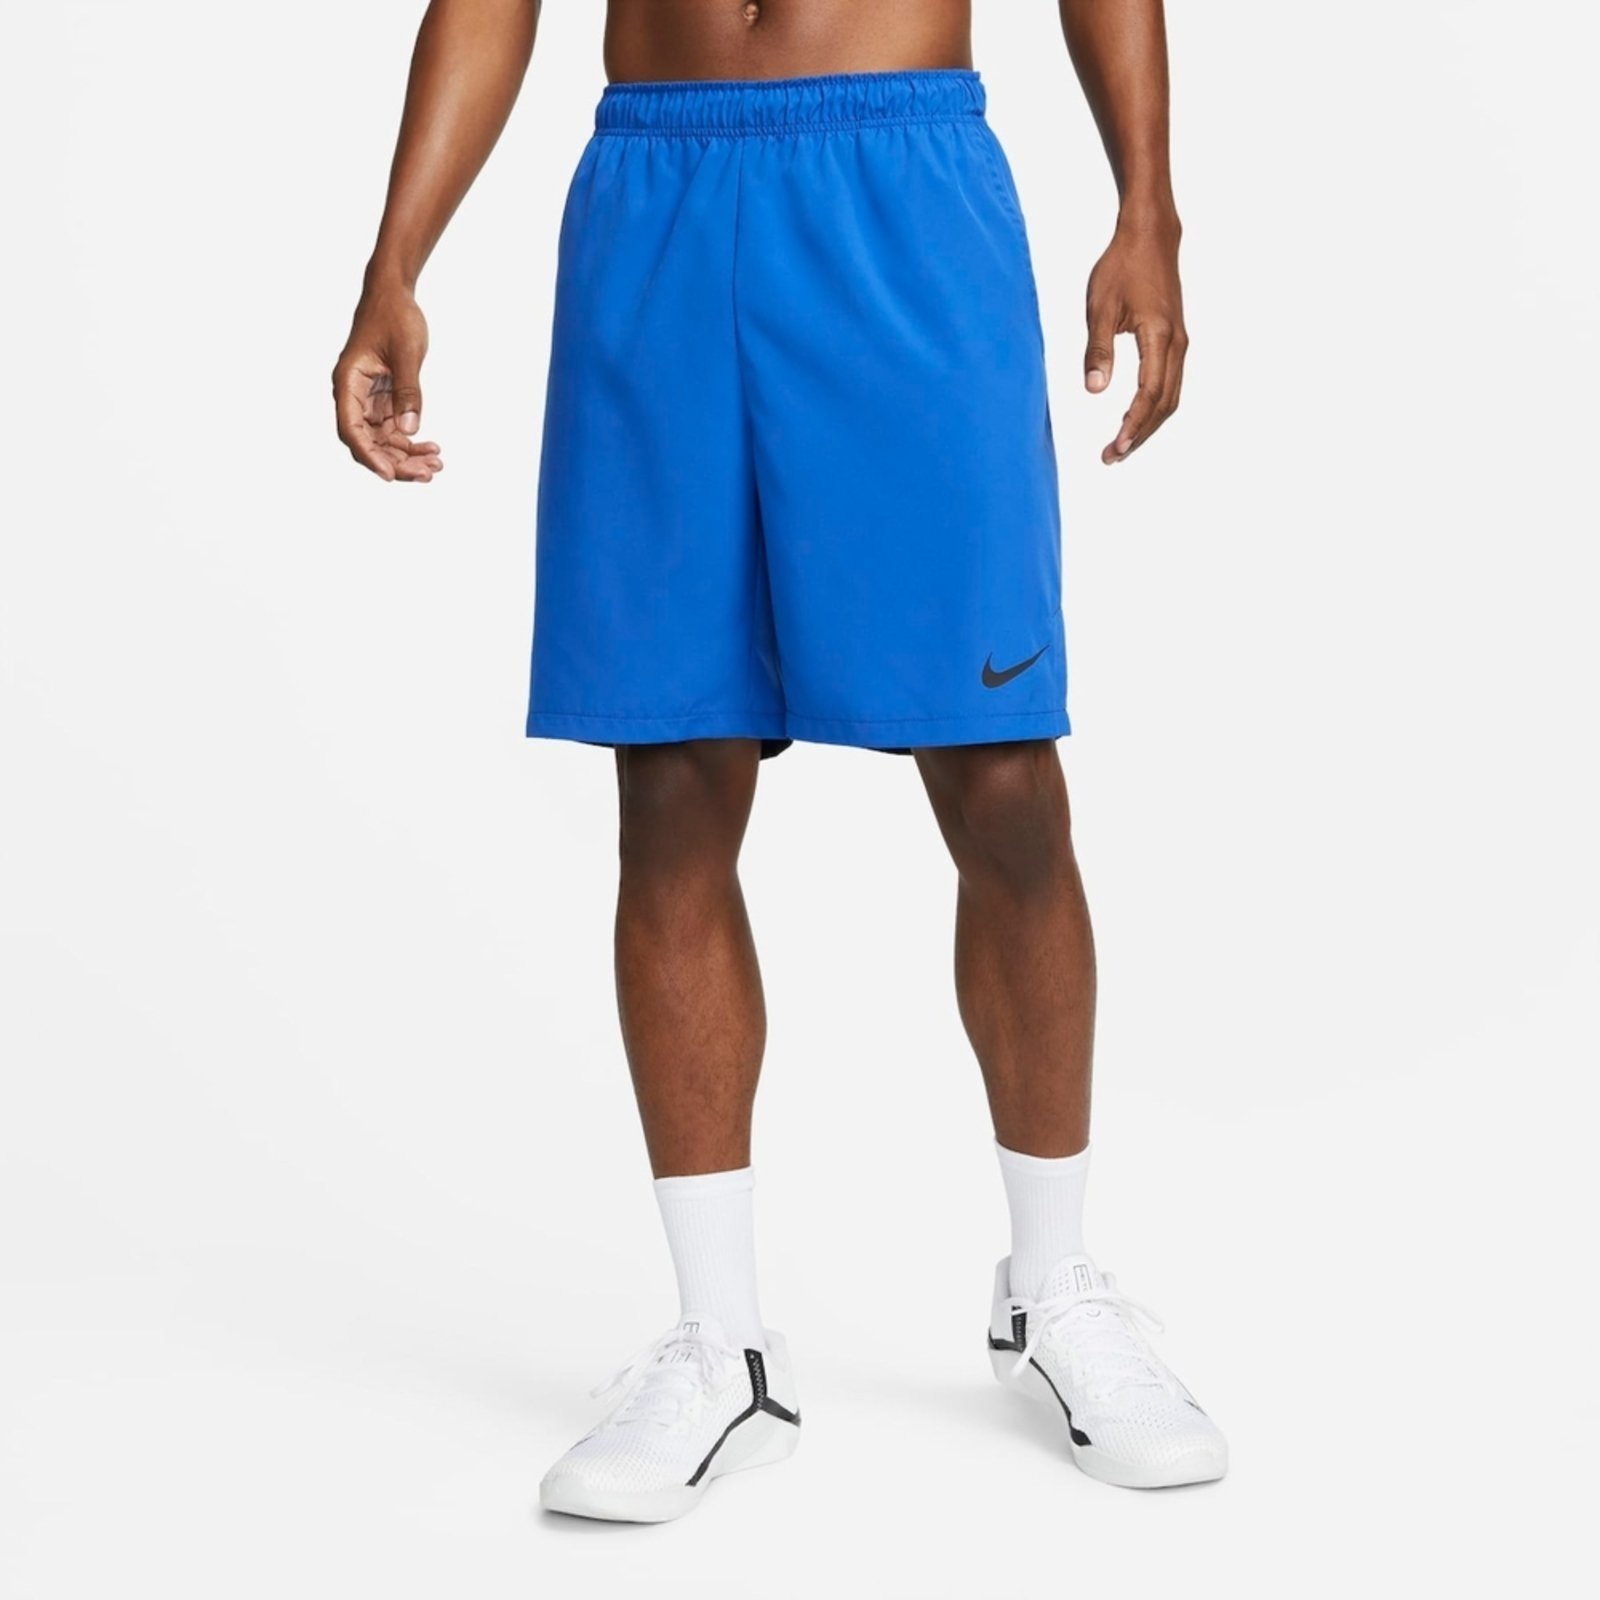 Bermuda Nike Flex Woven 2.0 - Masculino